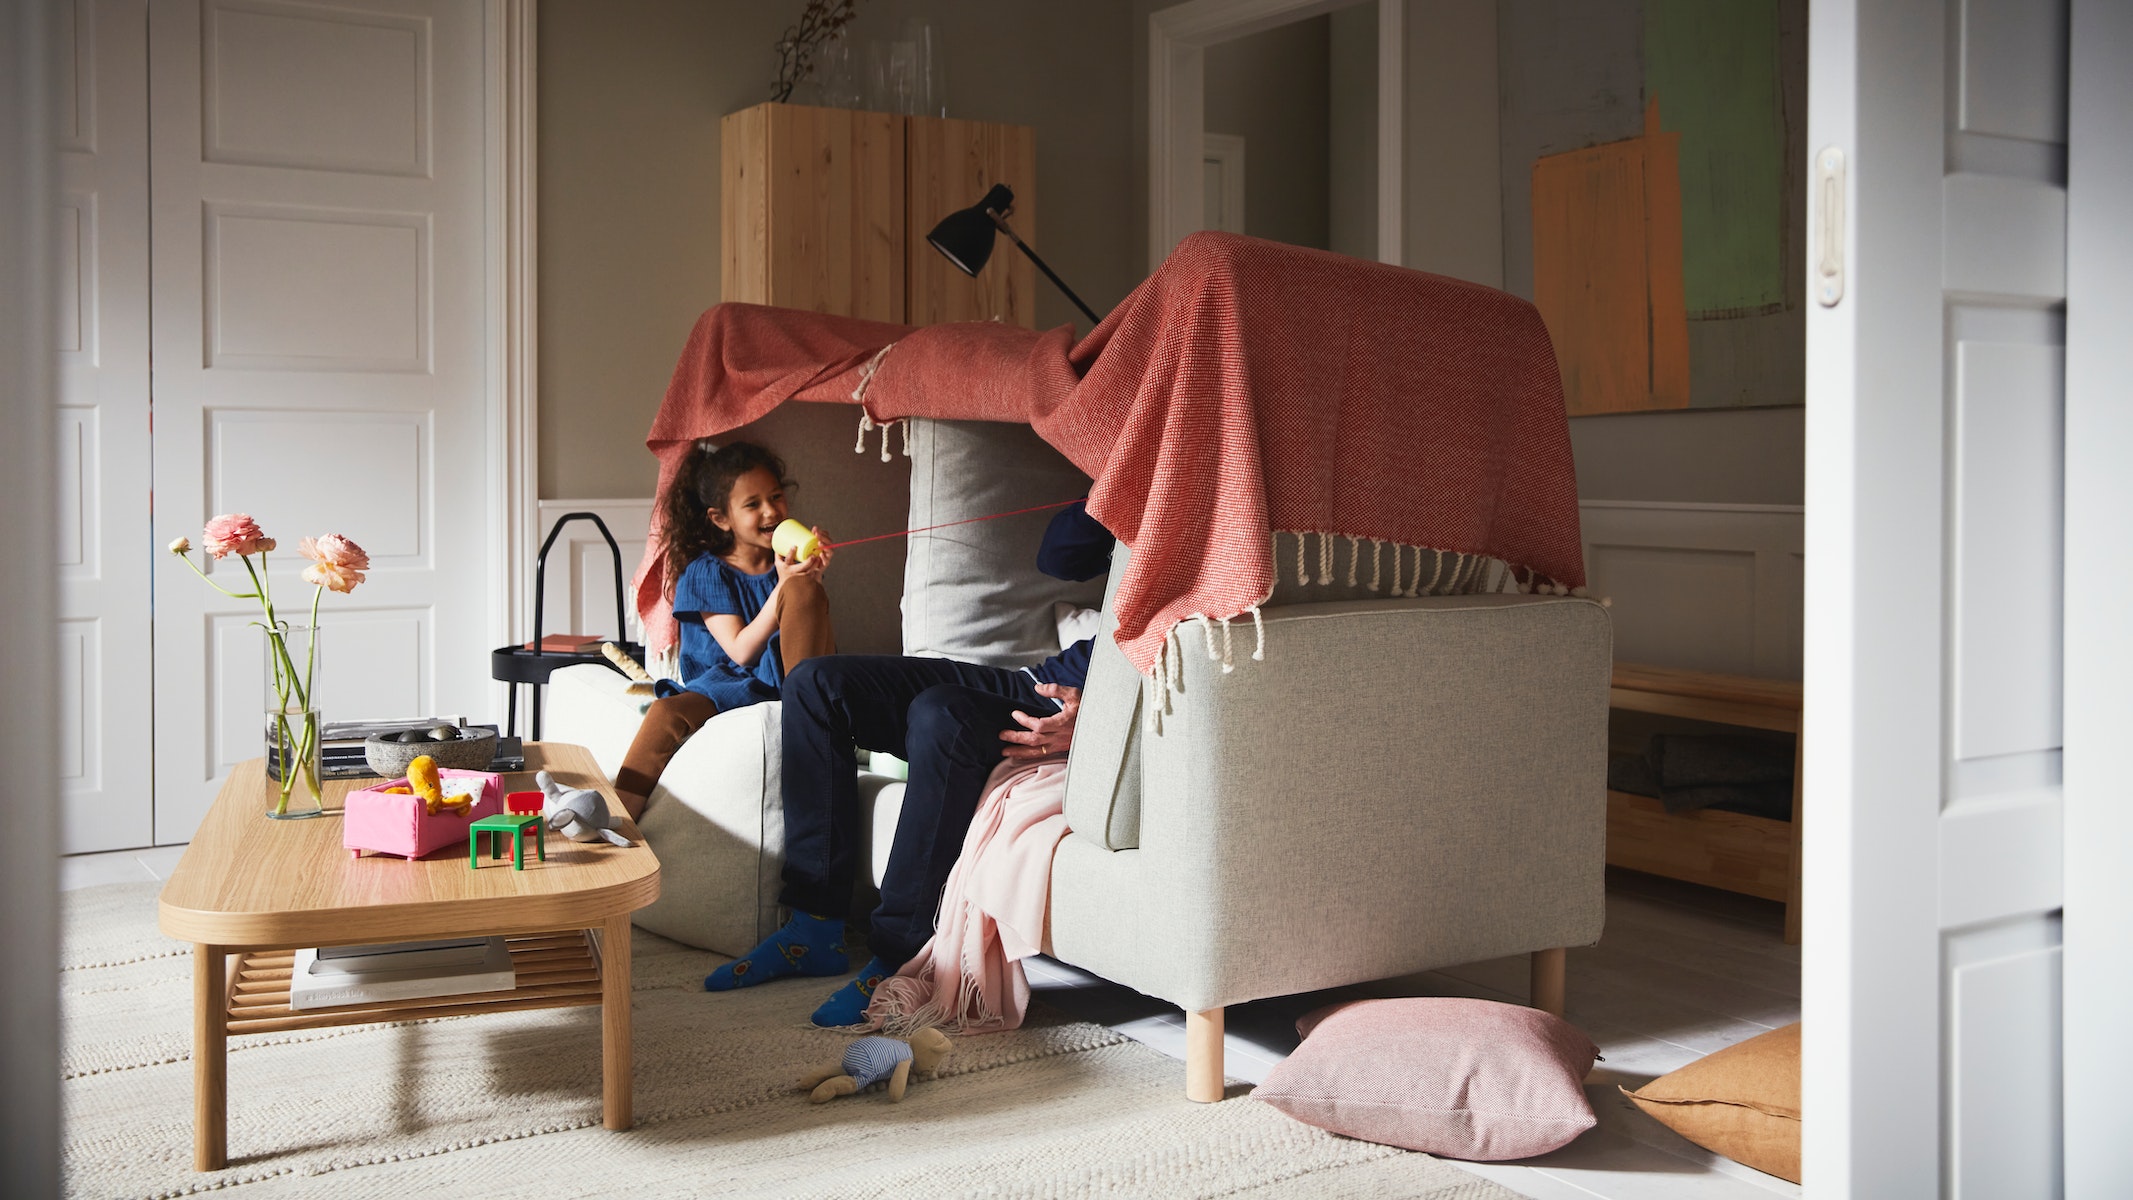 IKEA - Πώς να κατασκευάσετε ένα φρούριο από κουβέρτες